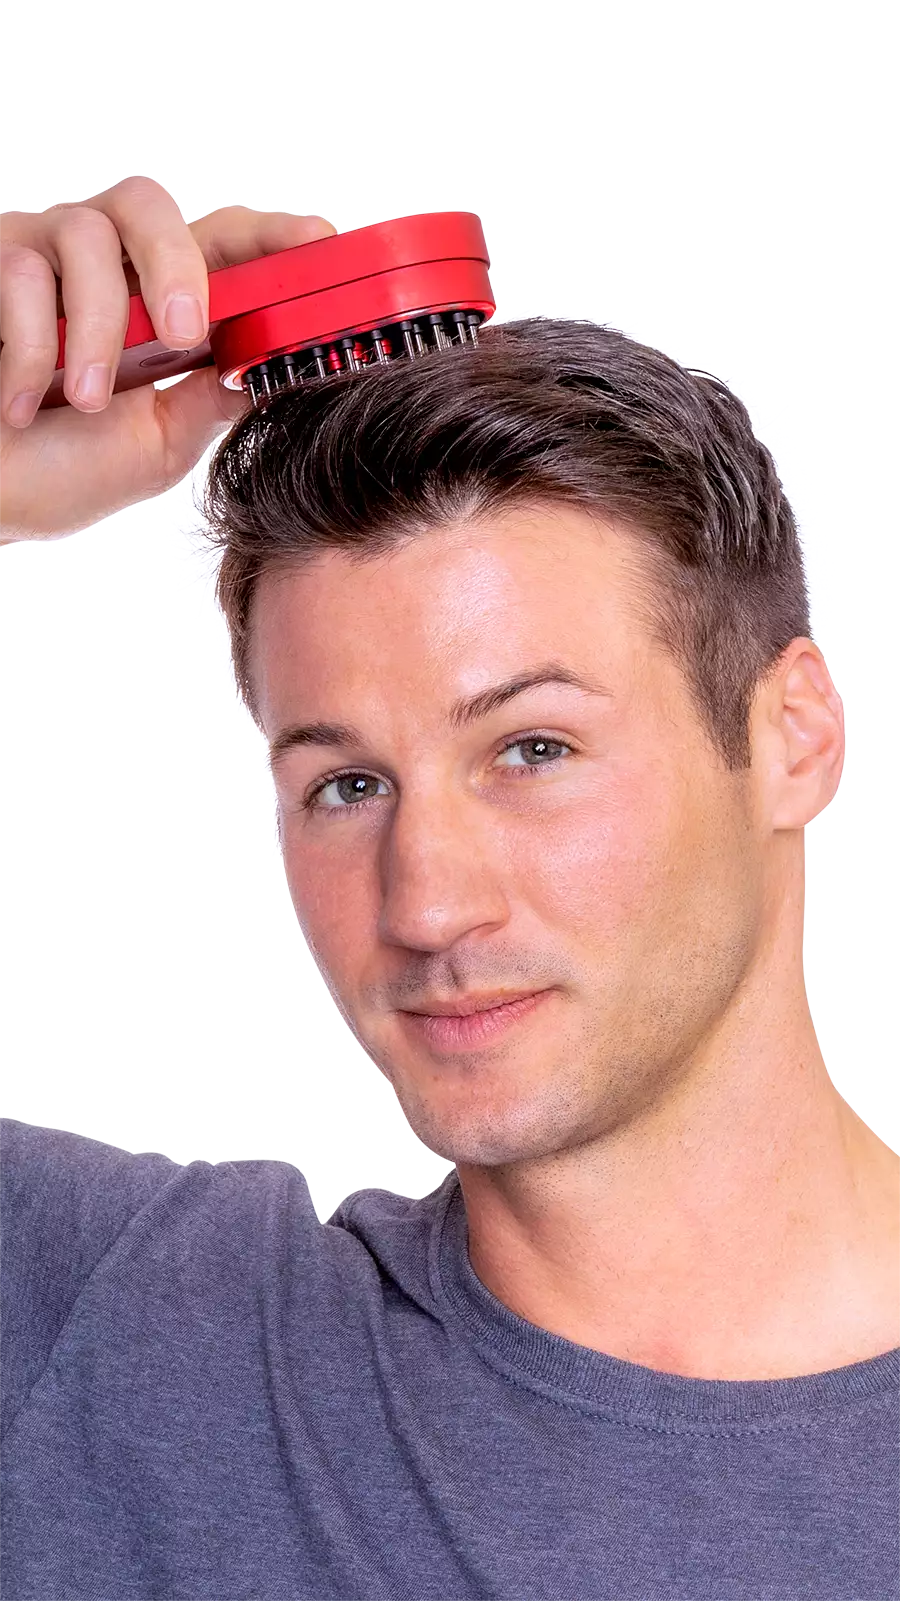 Man Using HairPod for Thinning Hair Treatment and Hair Growth